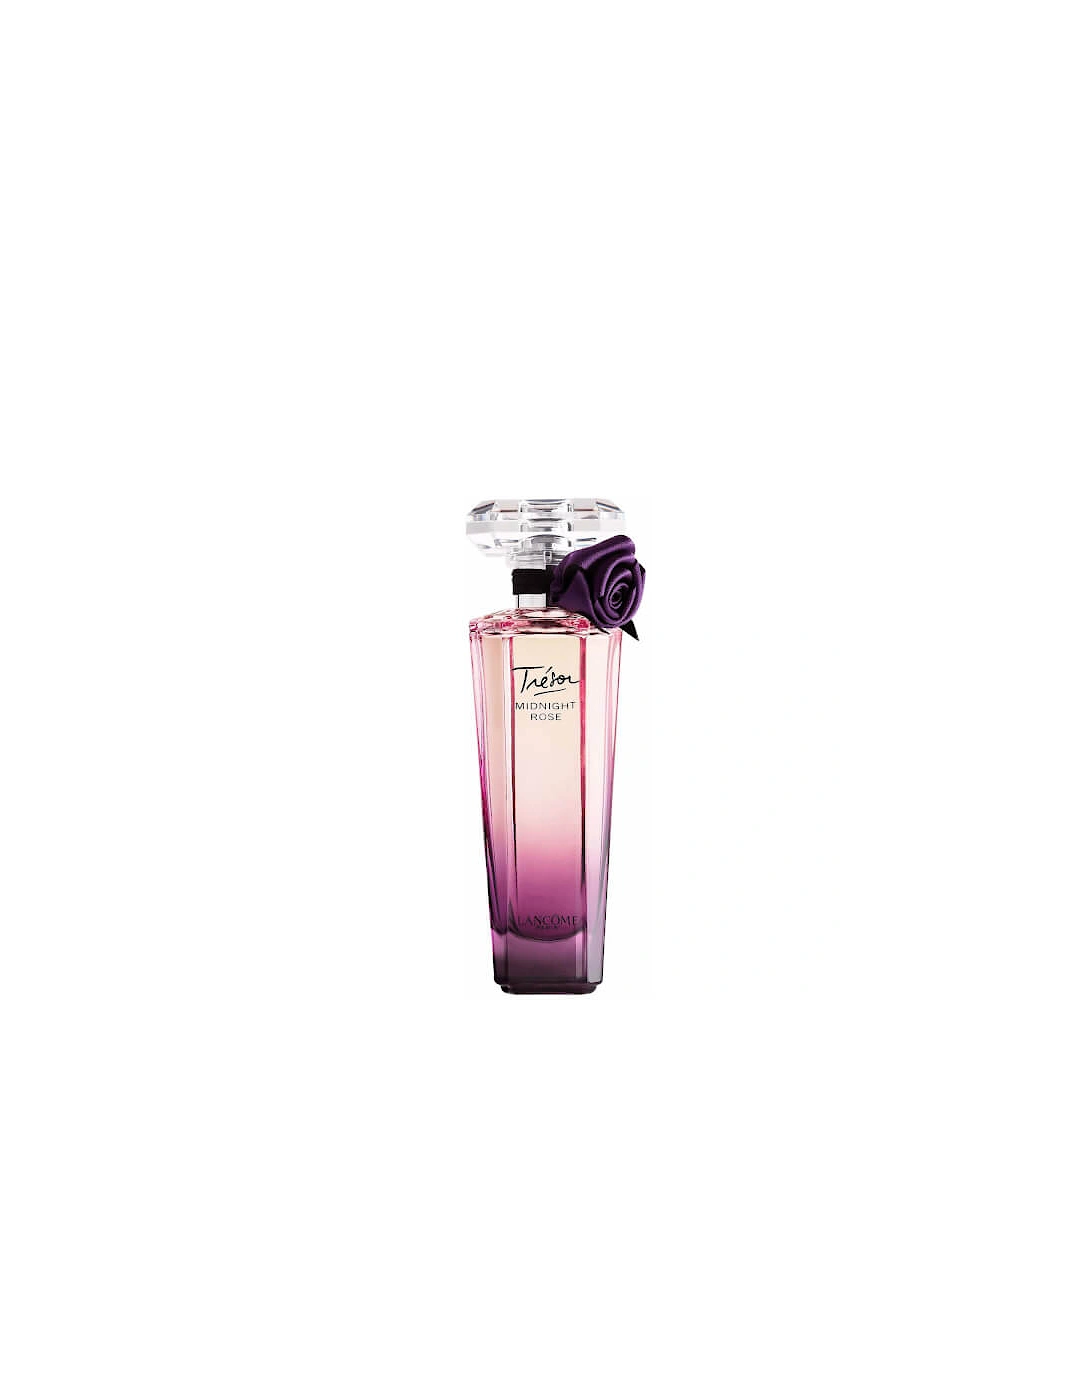 Trésor Midnight Rose Eau de Parfum 30ml, 2 of 1